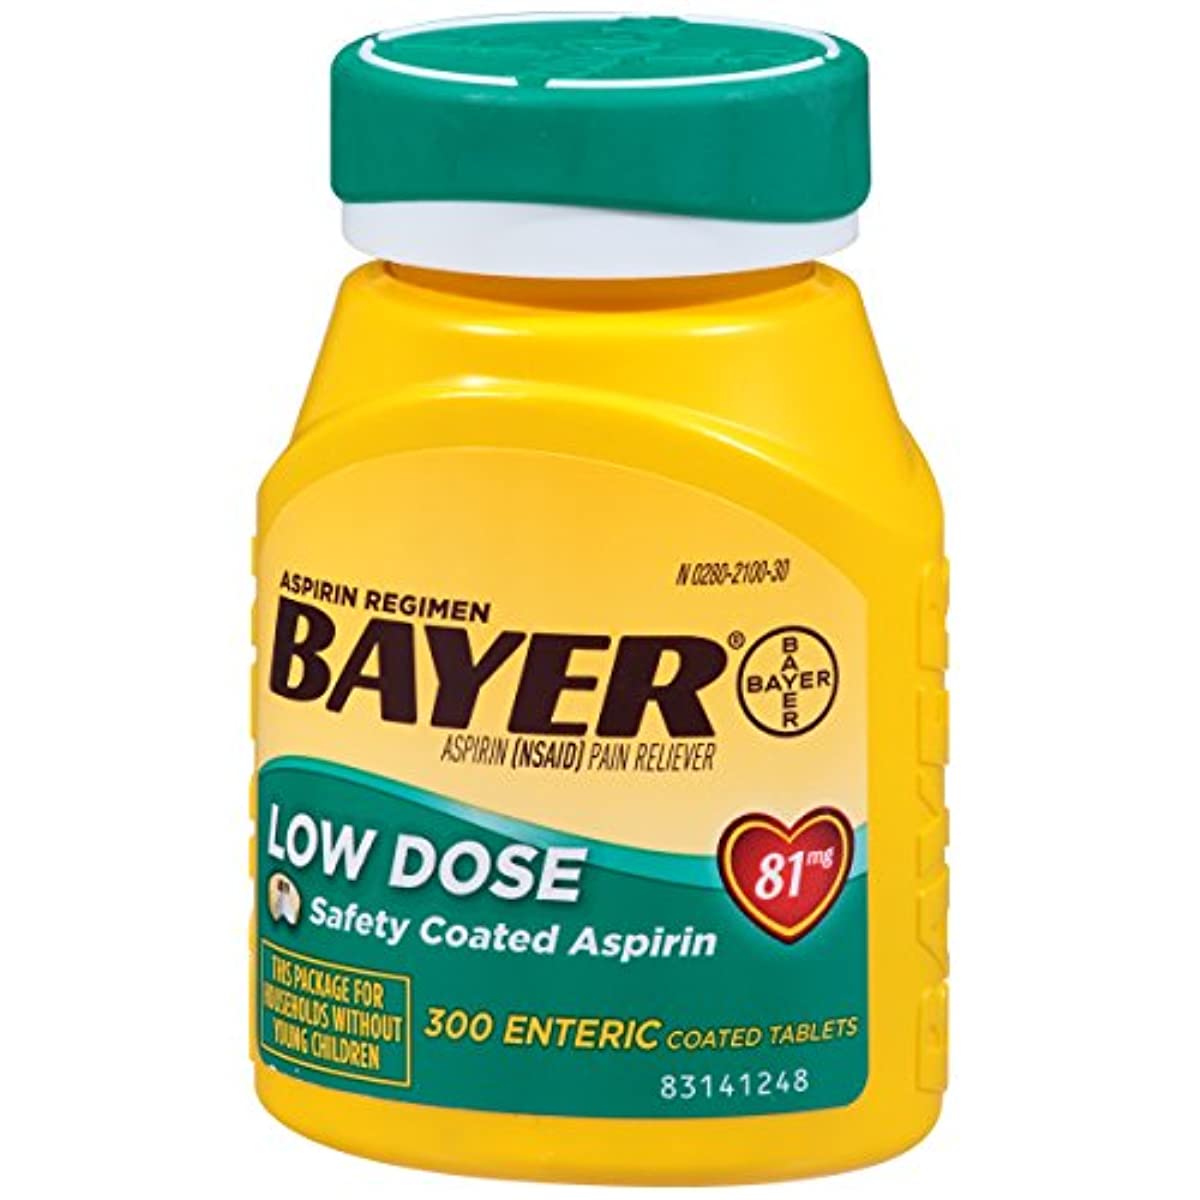 Bayer Aspirin Regimen, Low Dose (81 mg), Enteric Coated, 300 Count